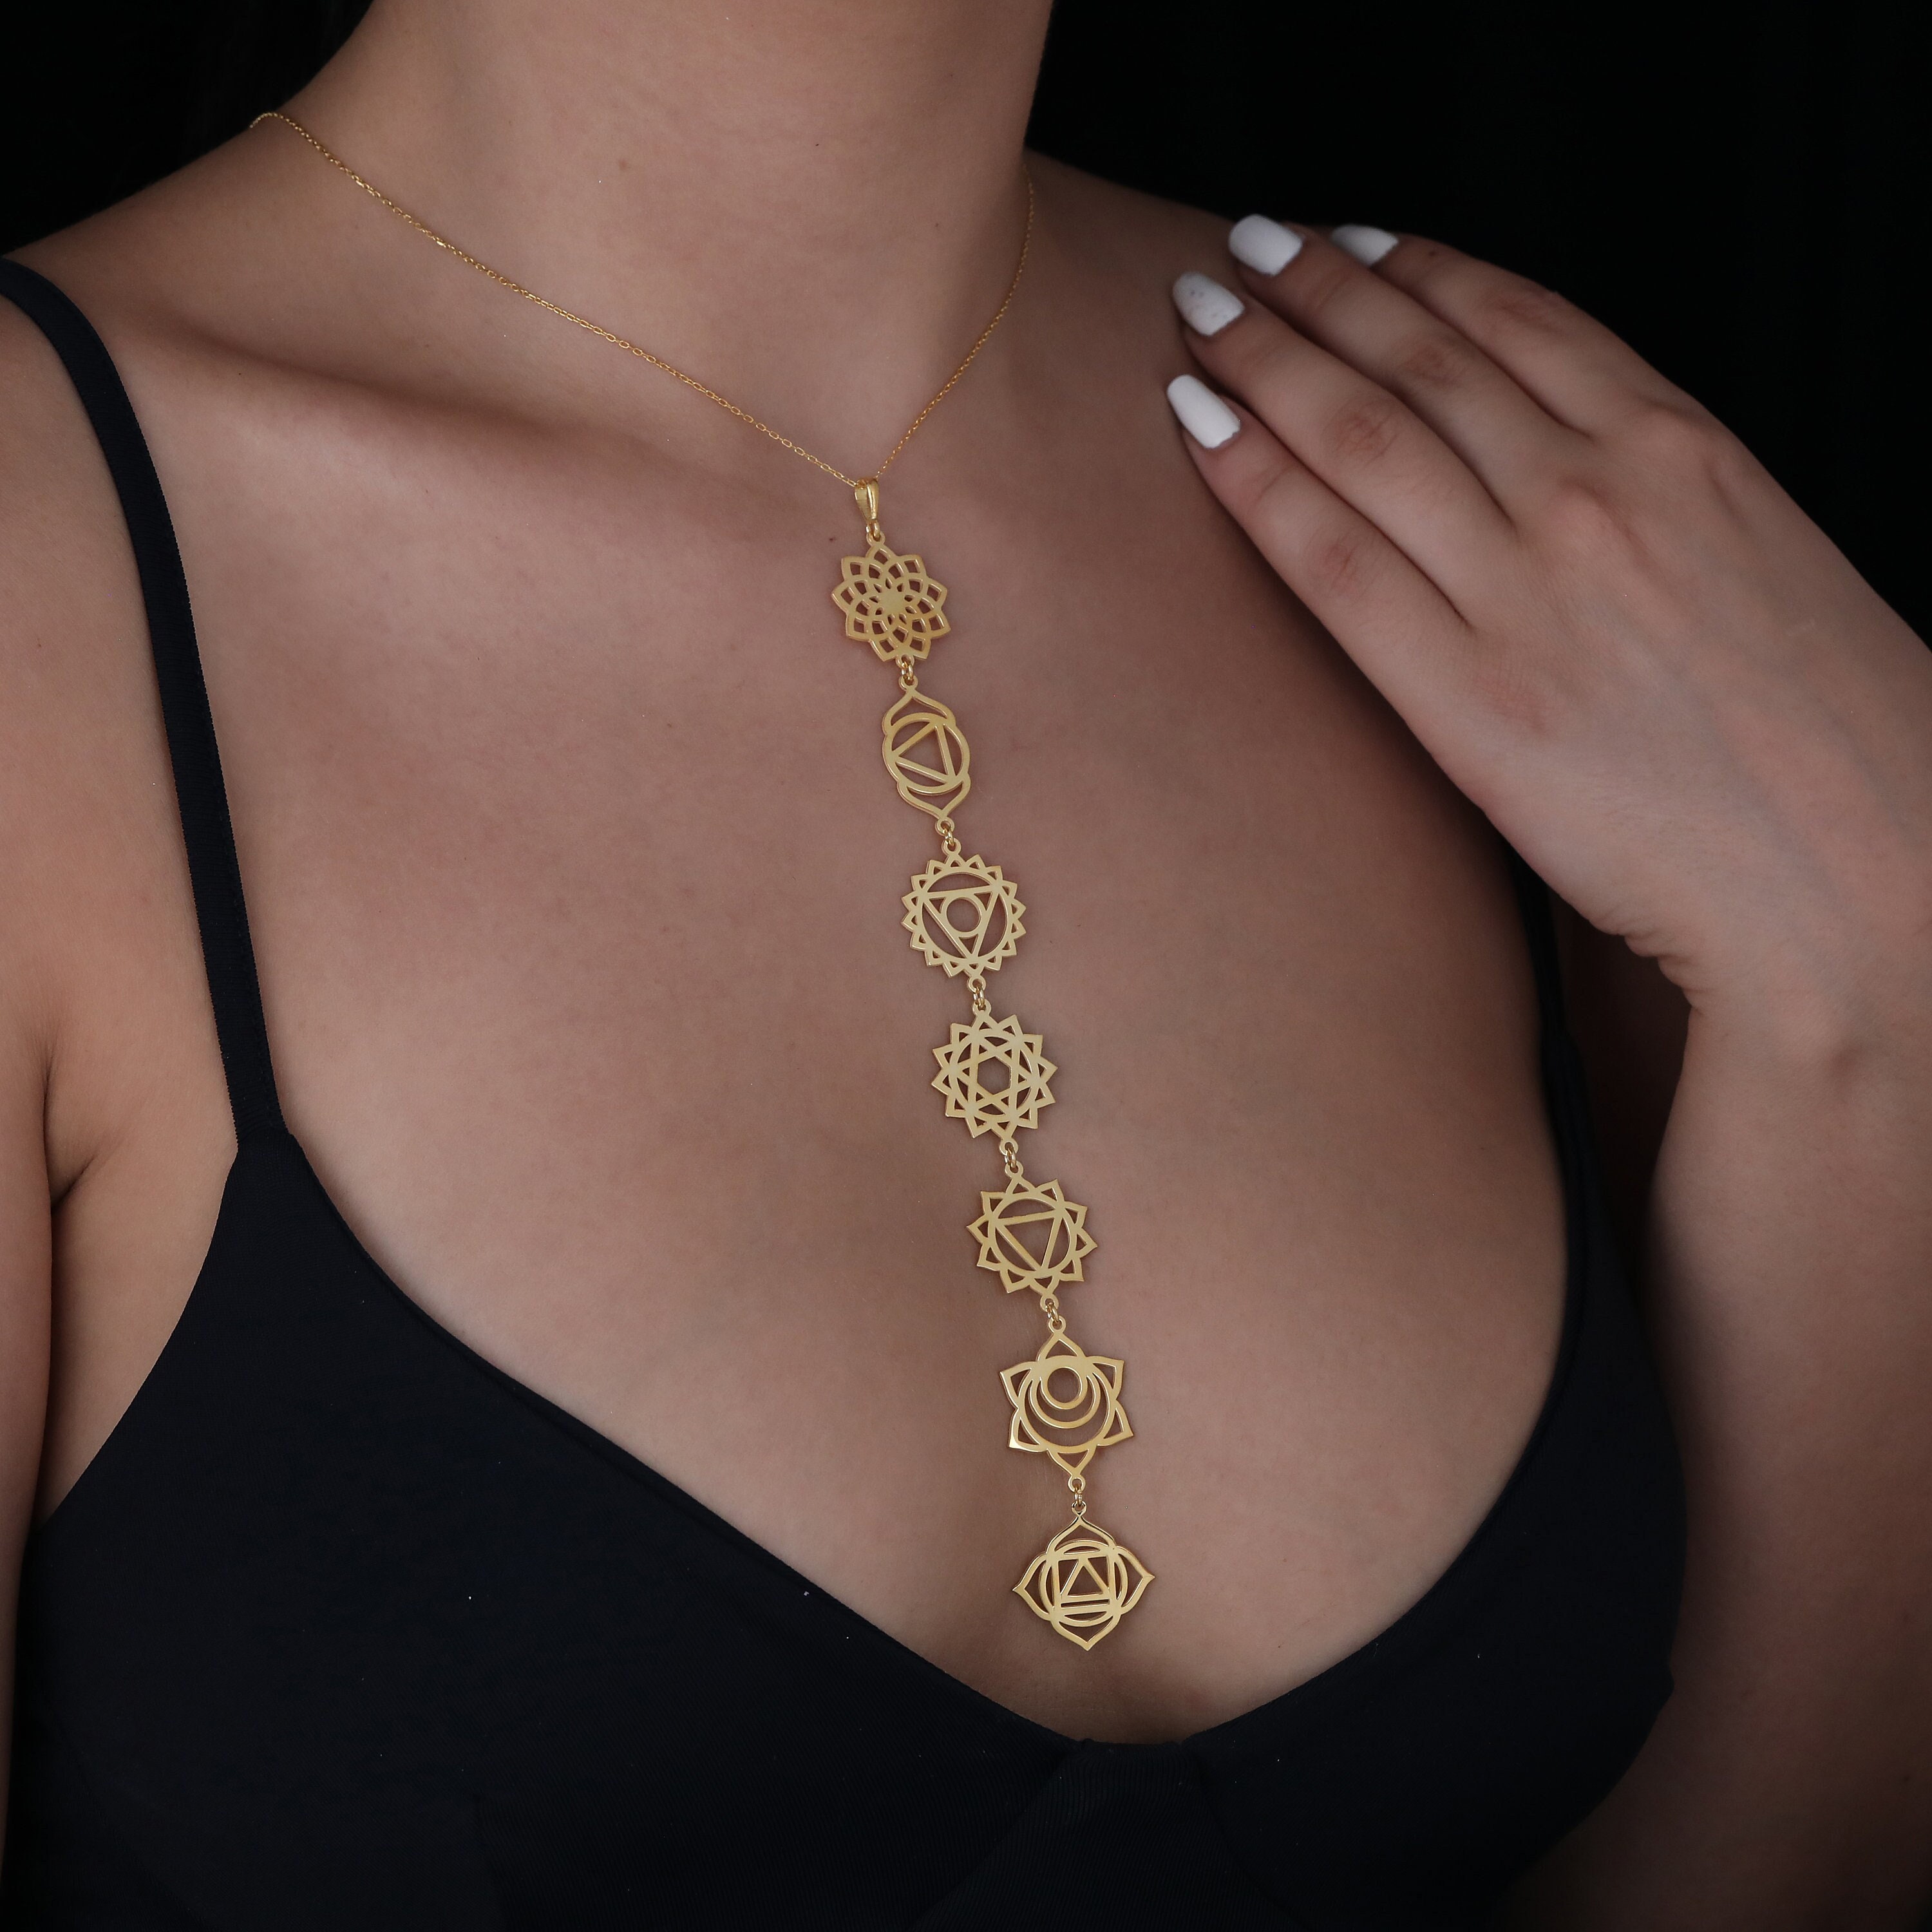 7 Chakra Necklace Energy Healing Beads Spiritual Yoga Jewelry